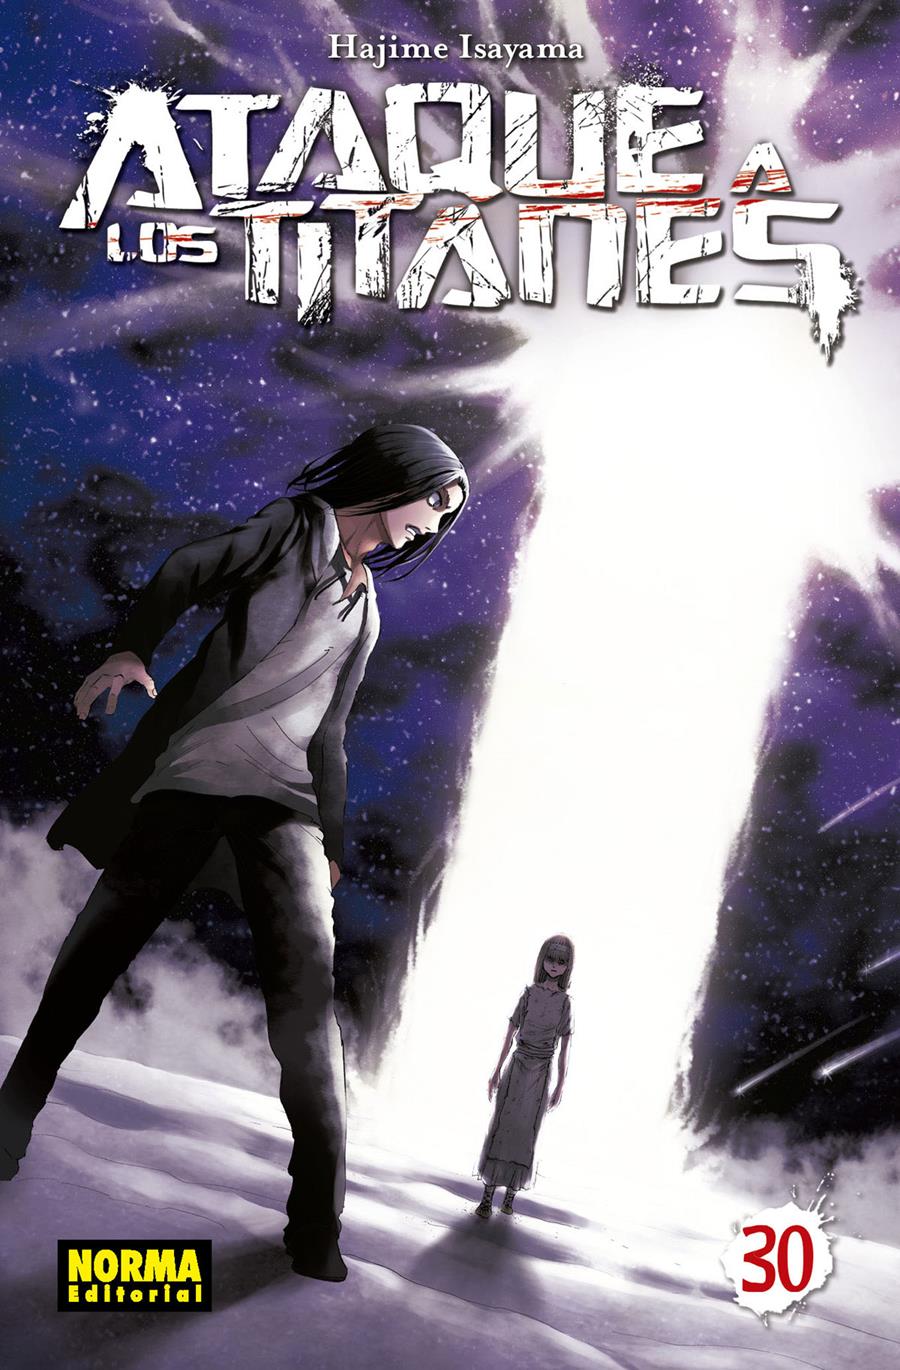 Ataque a los titanes 30 | N1020-NOR05 | Hajime Isayama | Terra de Còmic - Tu tienda de cómics online especializada en cómics, manga y merchandising